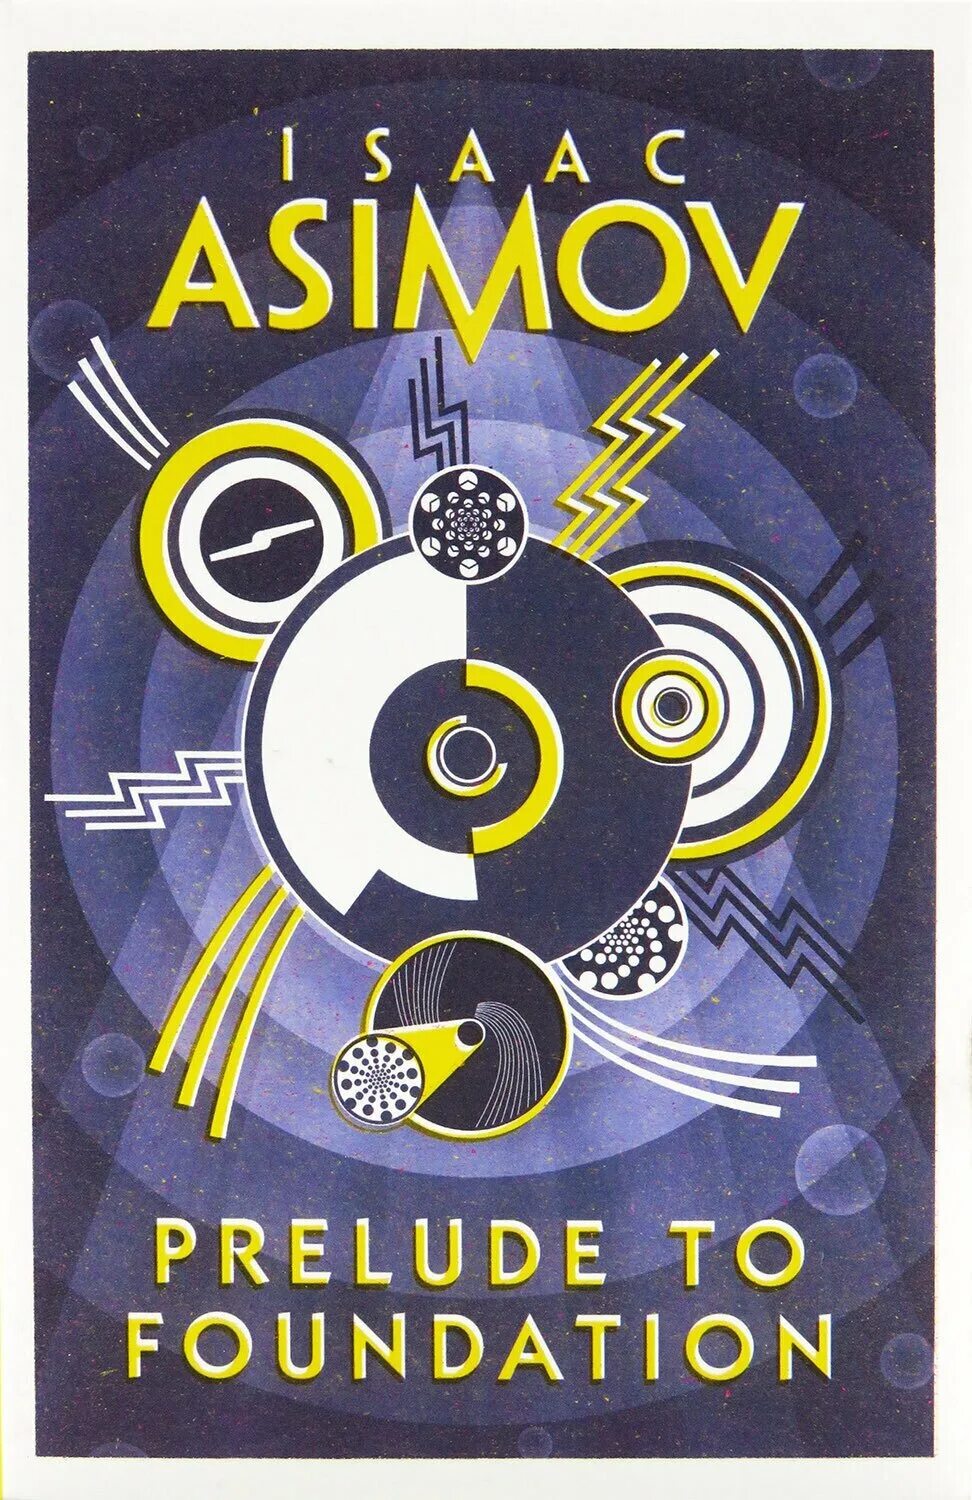 Prelude to Foundation. Asimov Prelude Foundation. Isaac Asimov Foundation купить. Foundation Isaac Asimov книга купить в Москве.